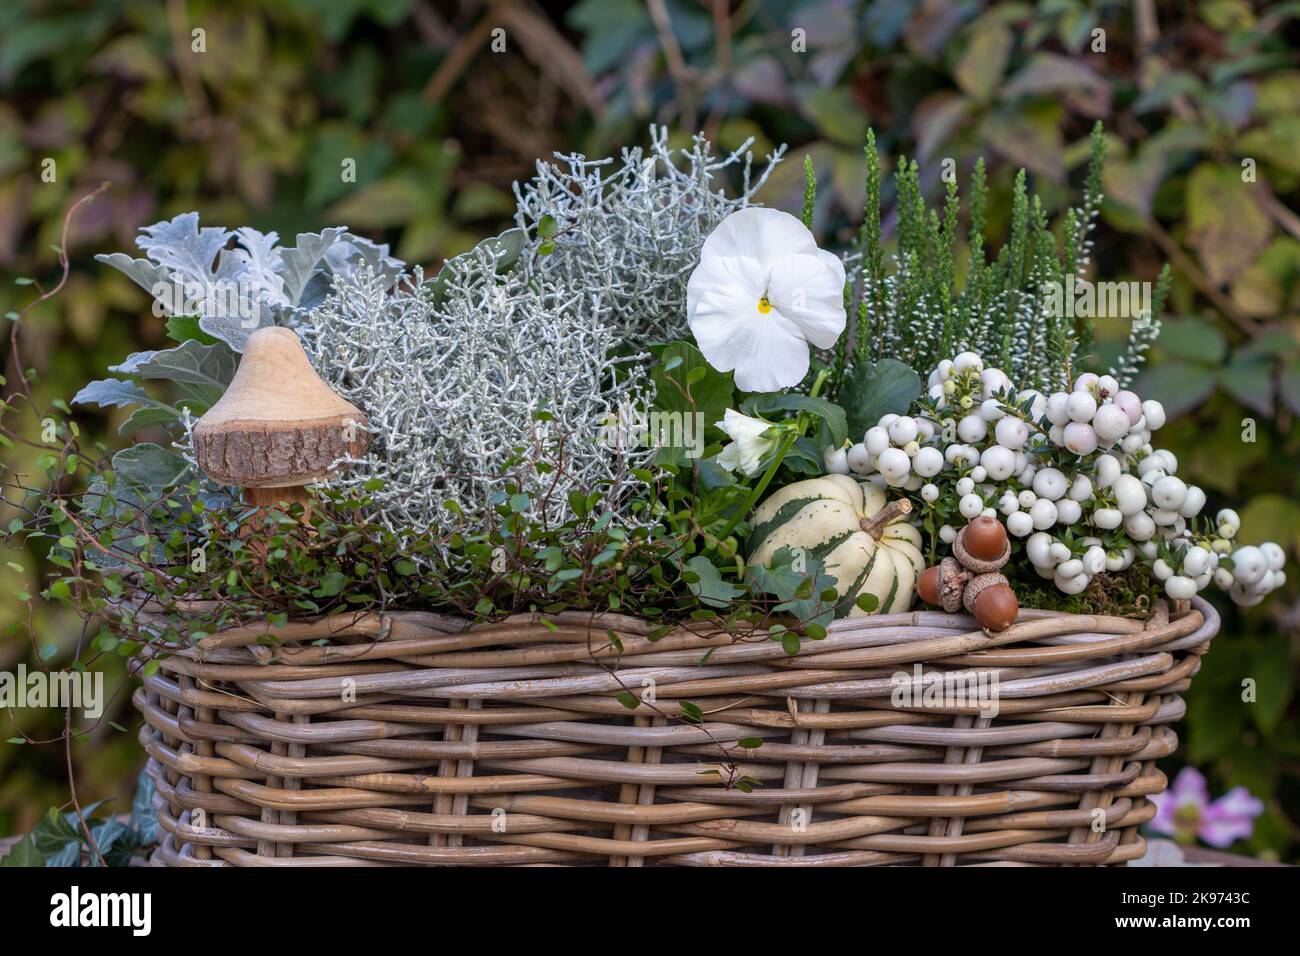 white viola flower, pernettya mucronata,  cushion bush and heather flower in basket in autumn garden Stock Photo